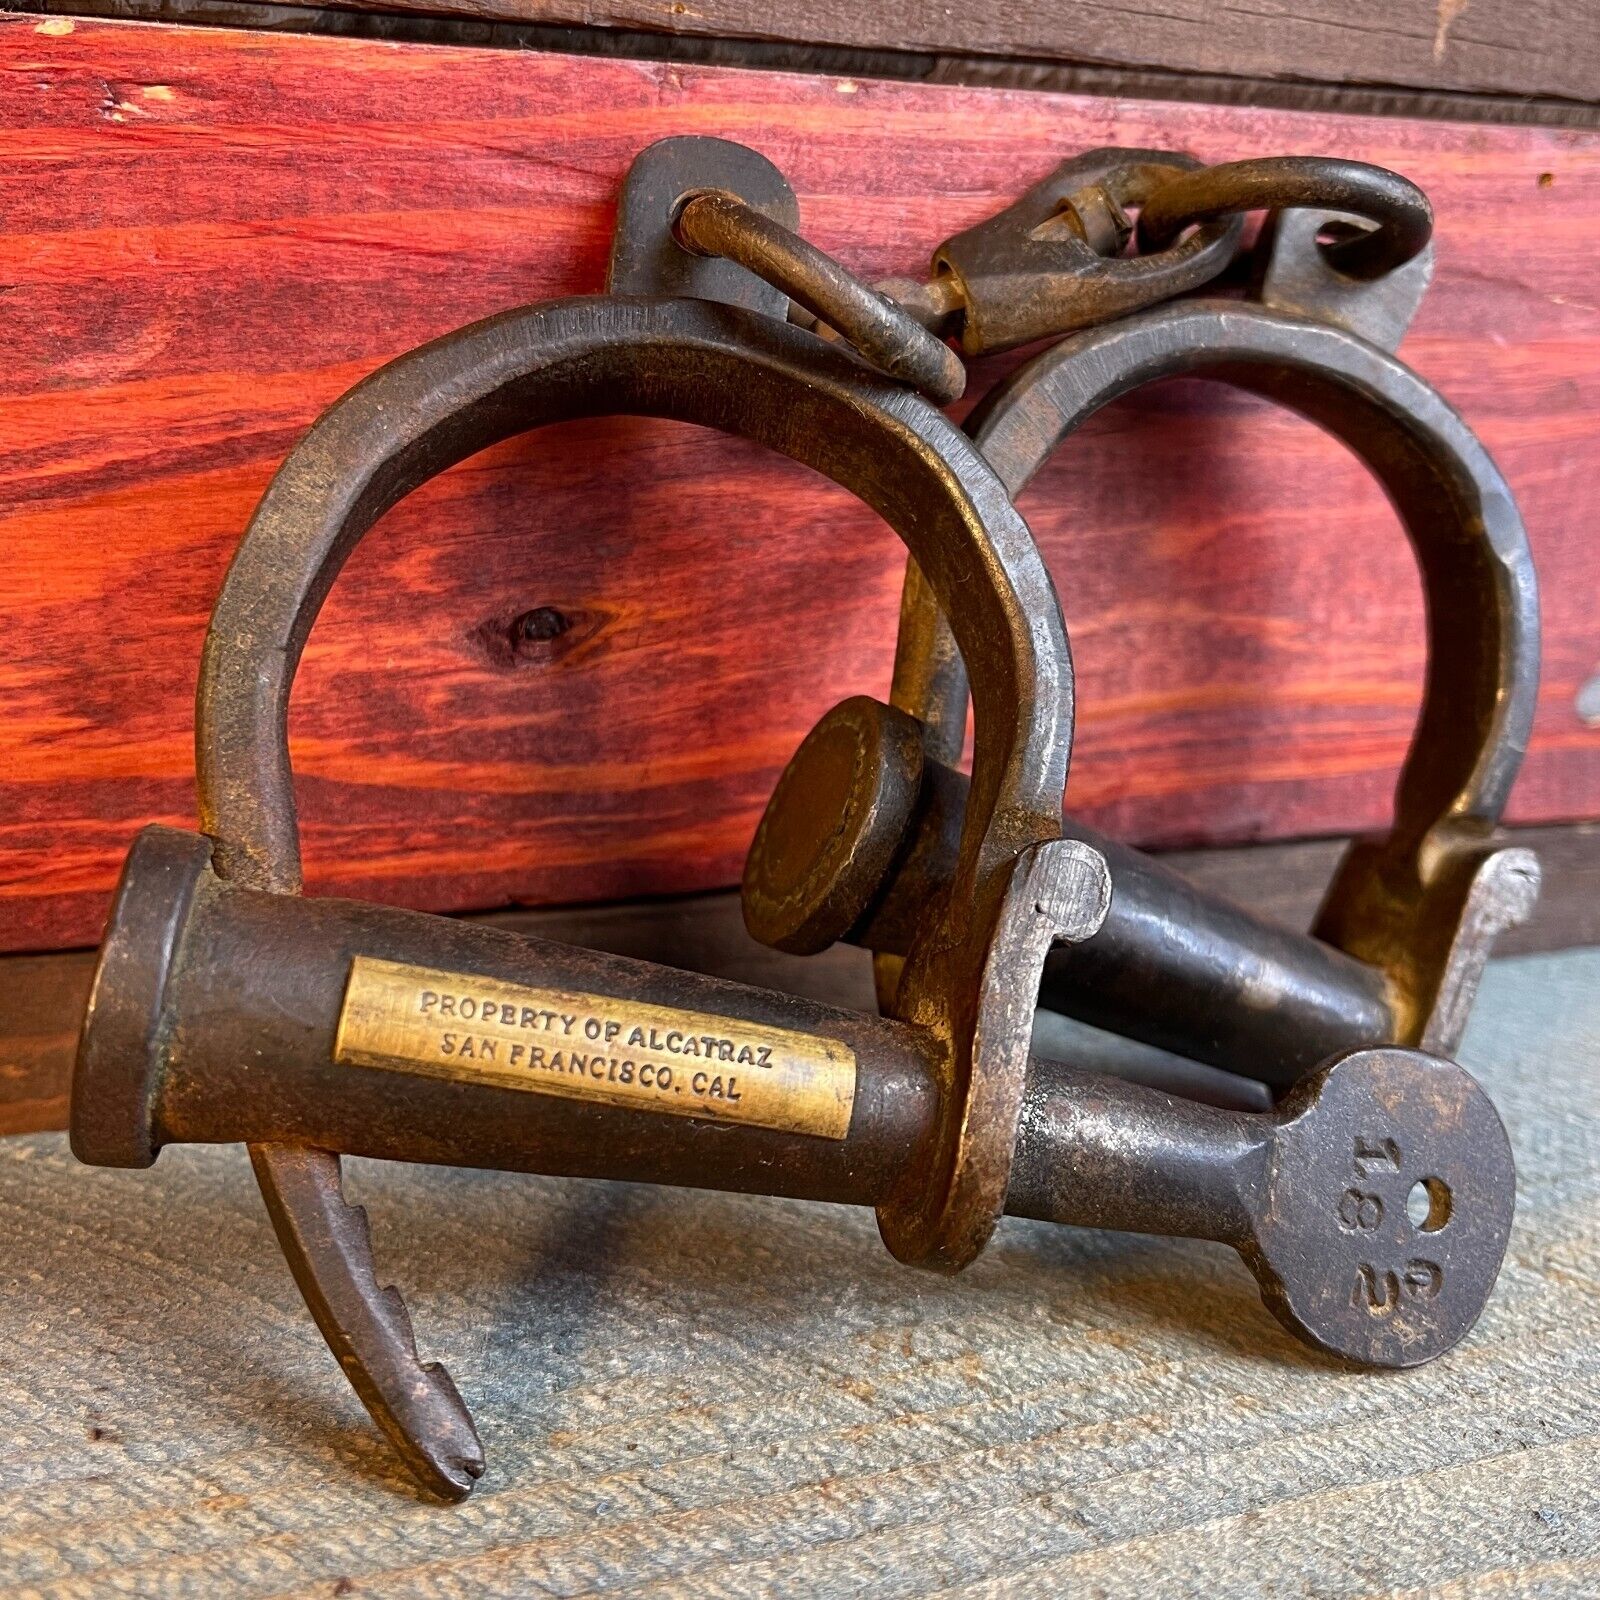 Property Of Alcatraz Prison Adjustable Handcuffs Iron Cuffs & Key